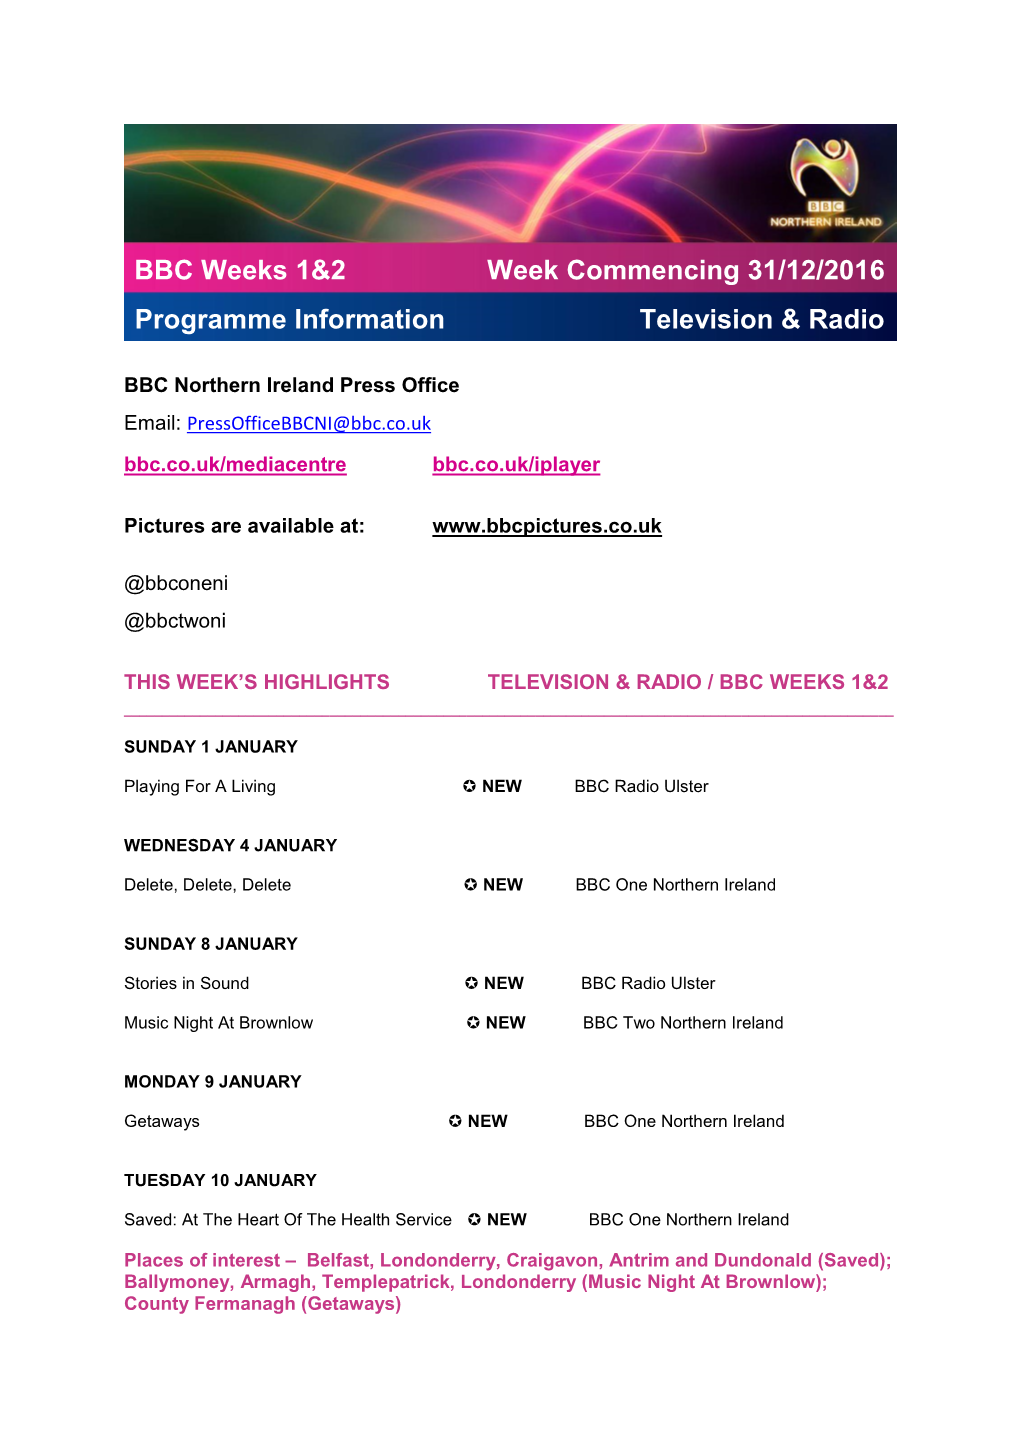 BBC Weeks 1&2 Programme Information Week Commencing 31